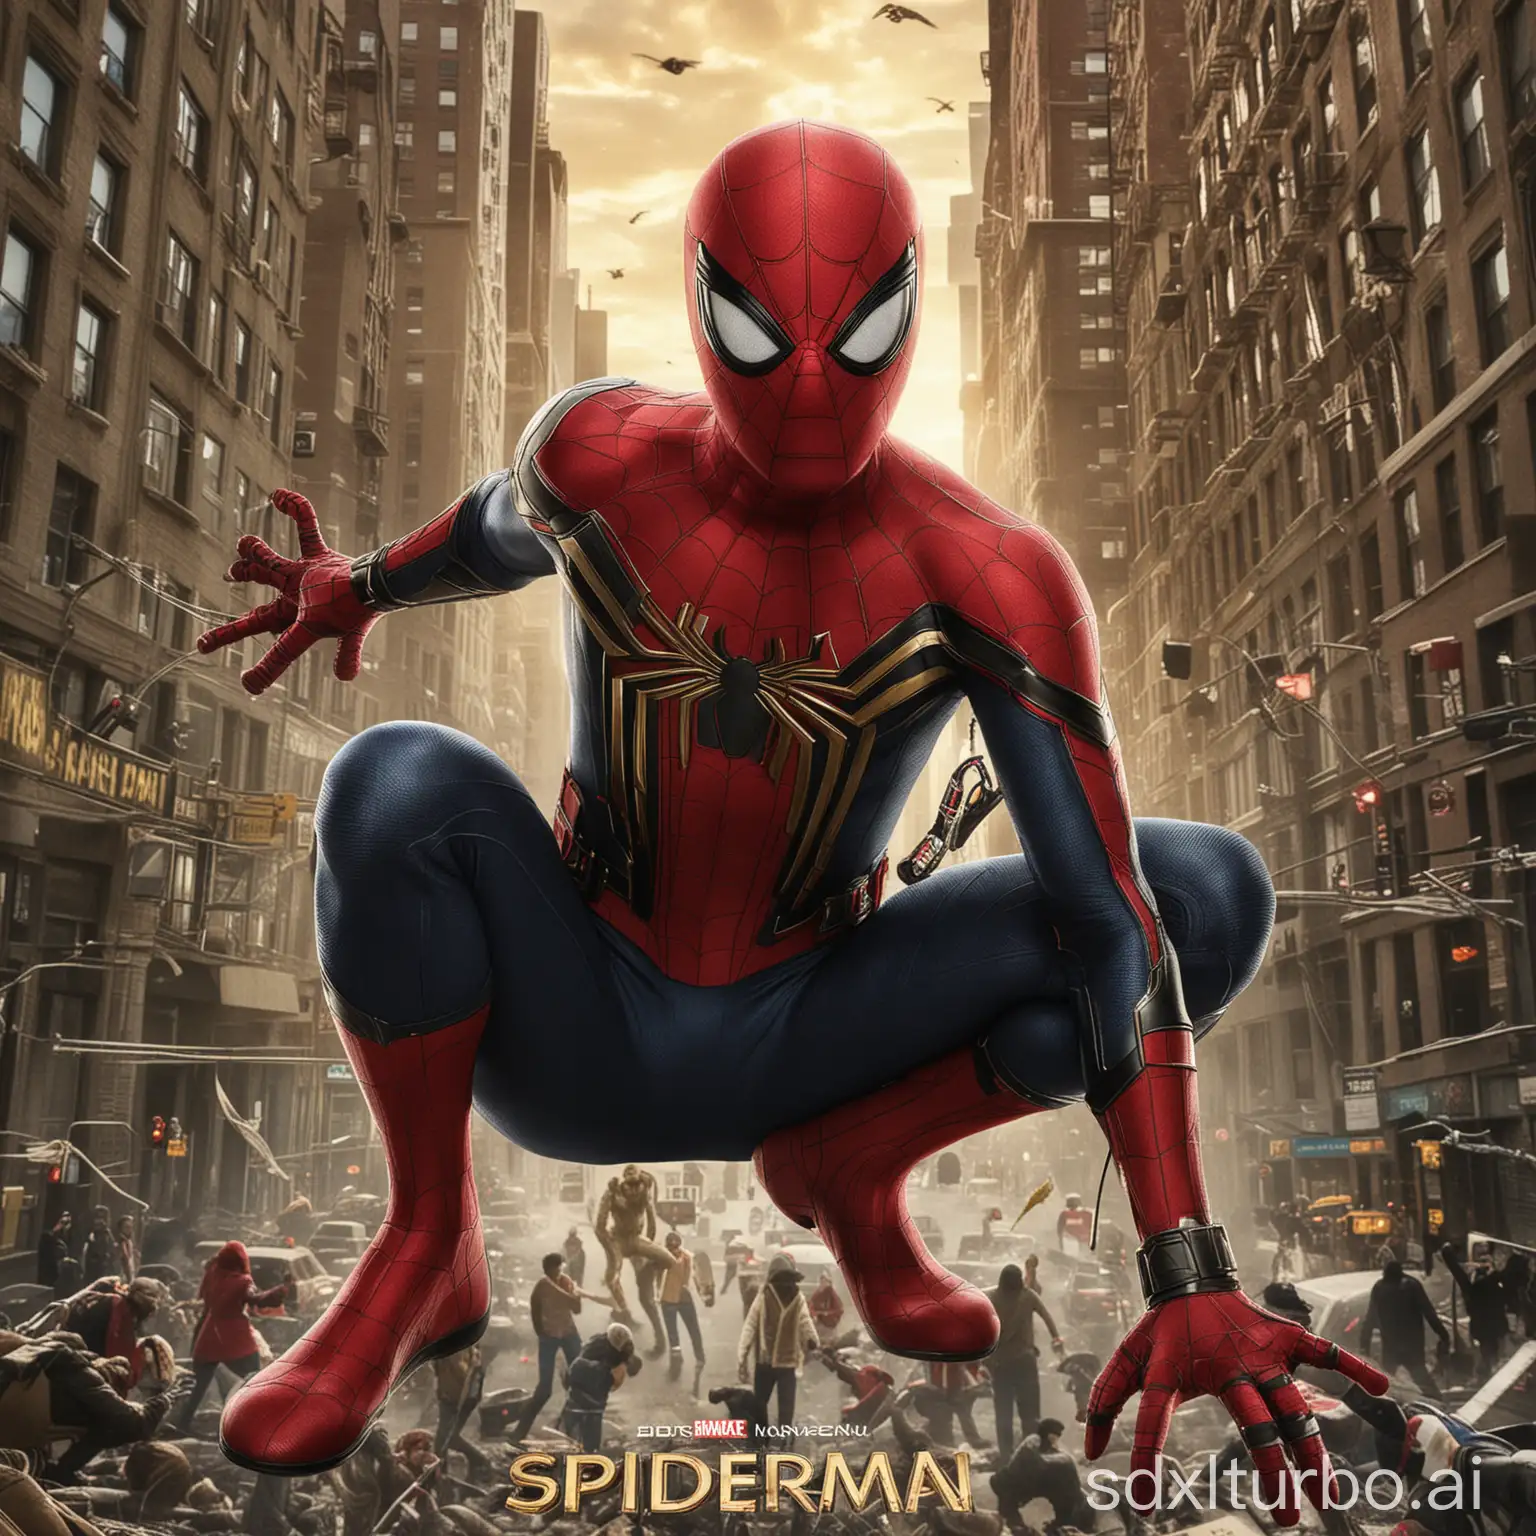 Spider-man No Way Home poster